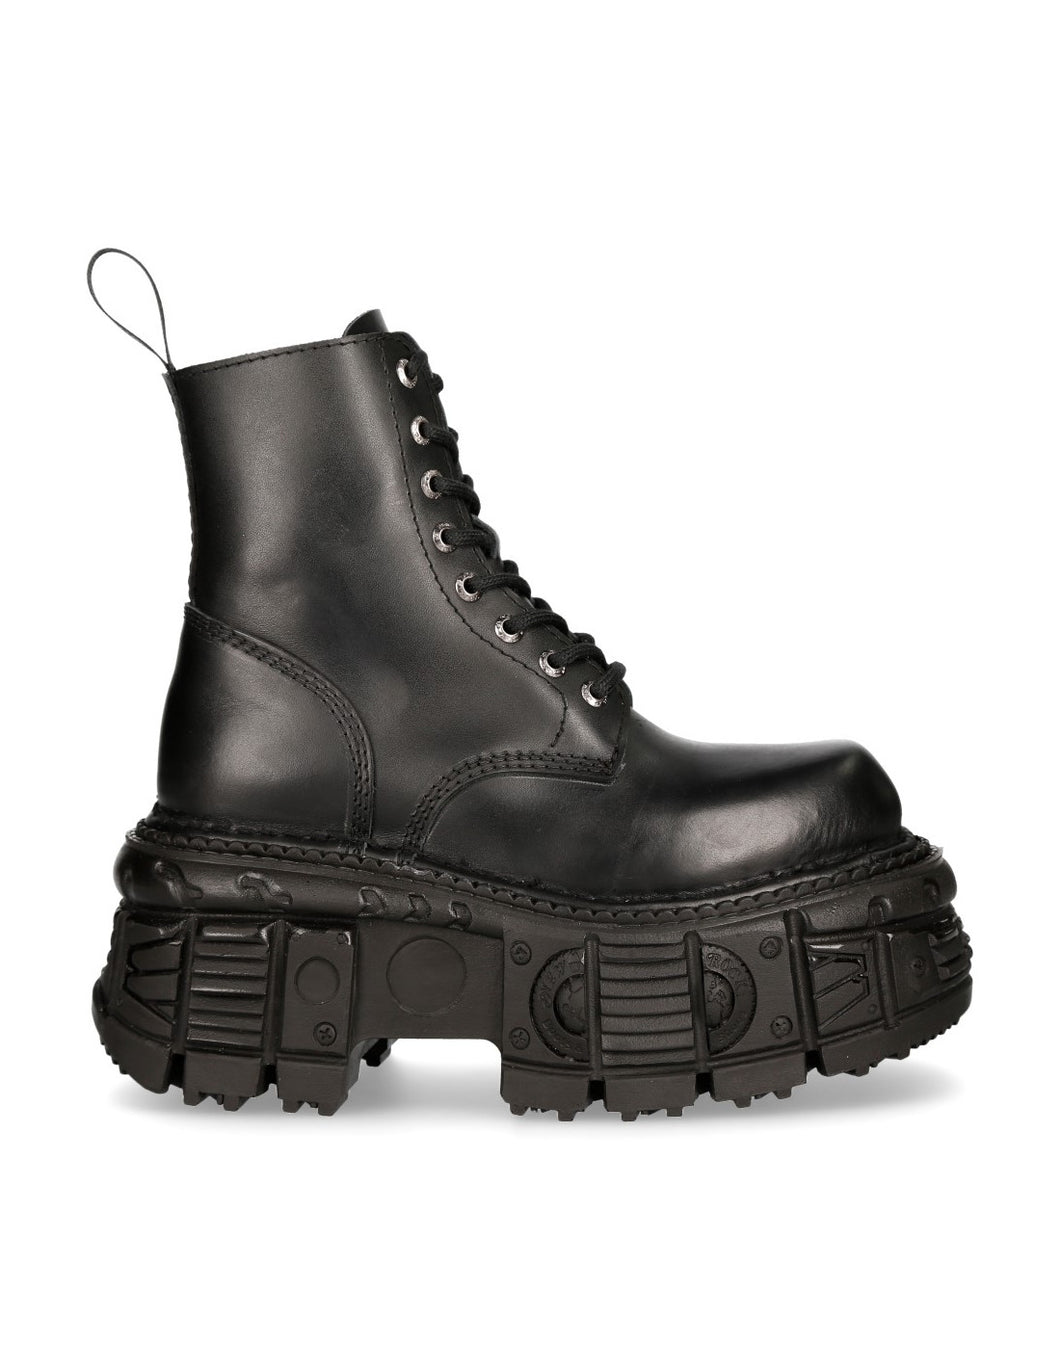 New Rock Shoes Boots Stiefel M-MILI084N-S5 Gothic Tank Collection Black Echtleder